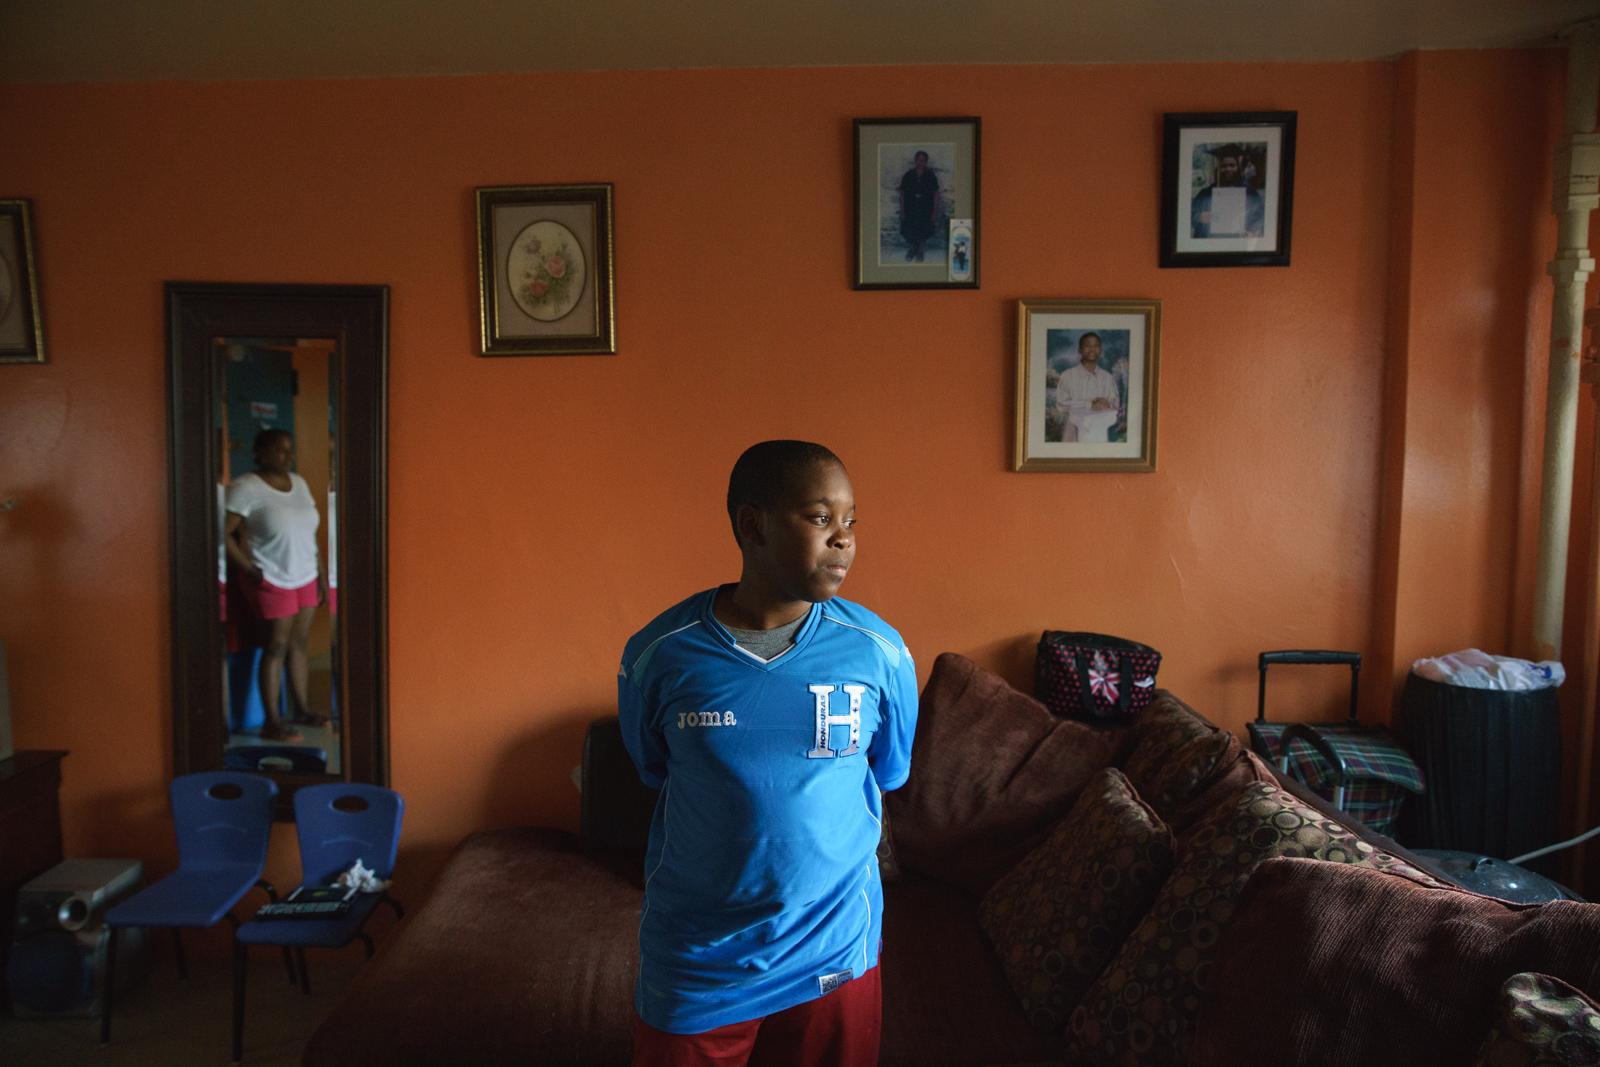 Thousands of children cross the U.S. border alone, seeking refuge.